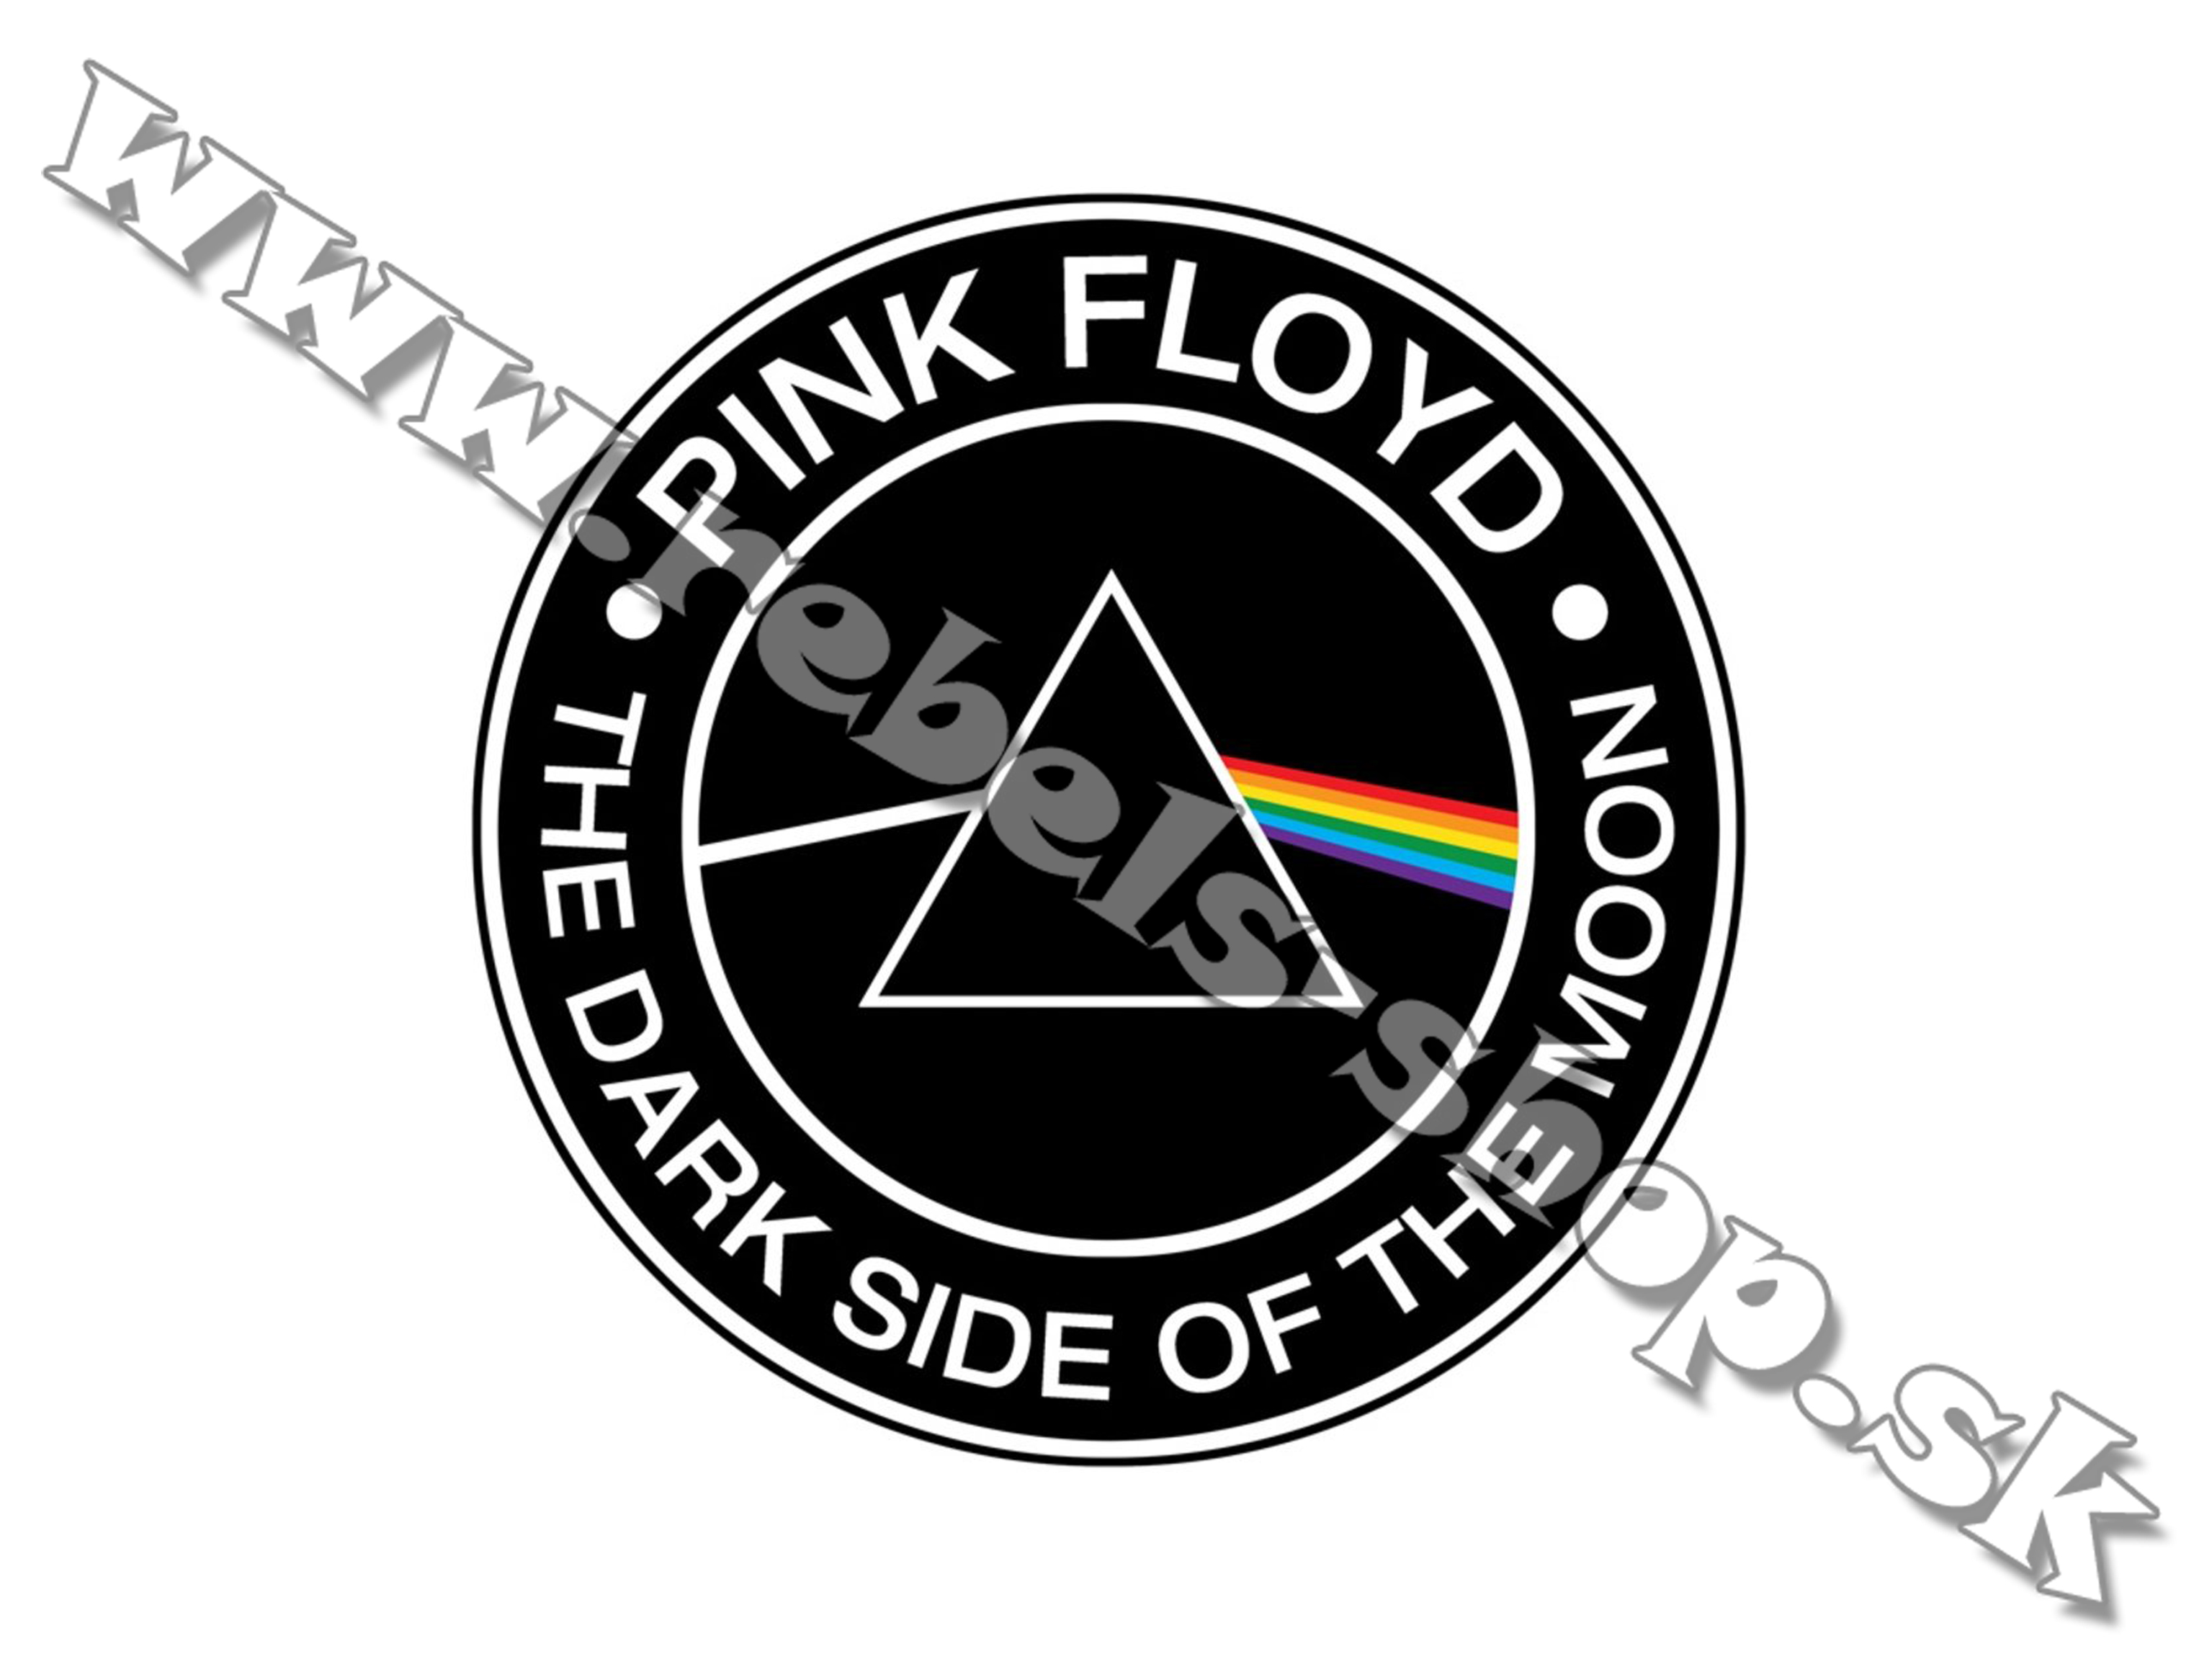 Odznak "Pink Floyd"